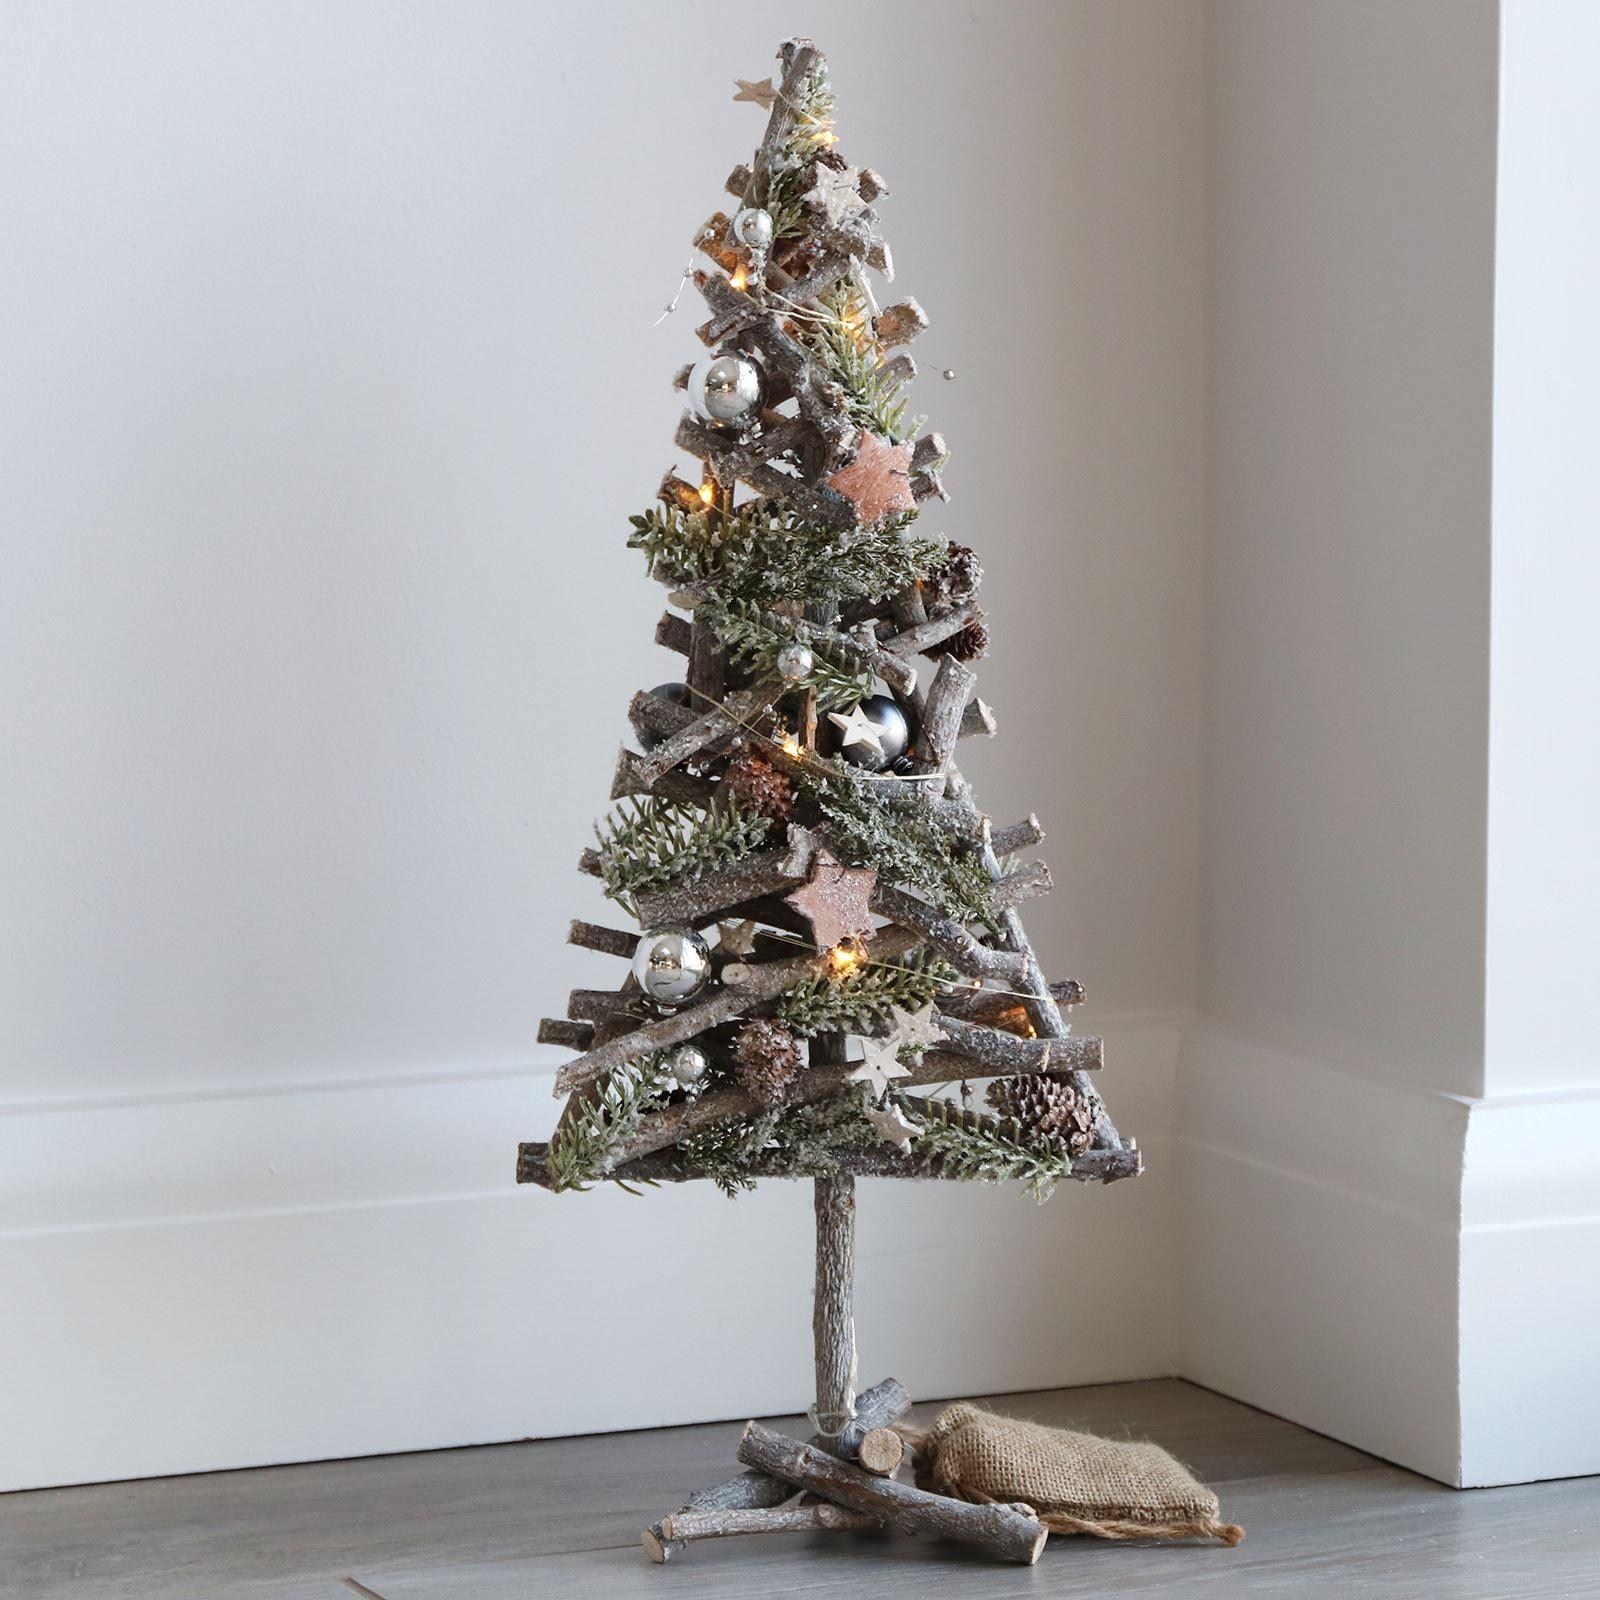 Mr Crimbo 22" Pre-Lit Wooden Stick Christmas Tree Ornament - MrCrimbo.co.uk -XS5772 - -christmas tree ornament